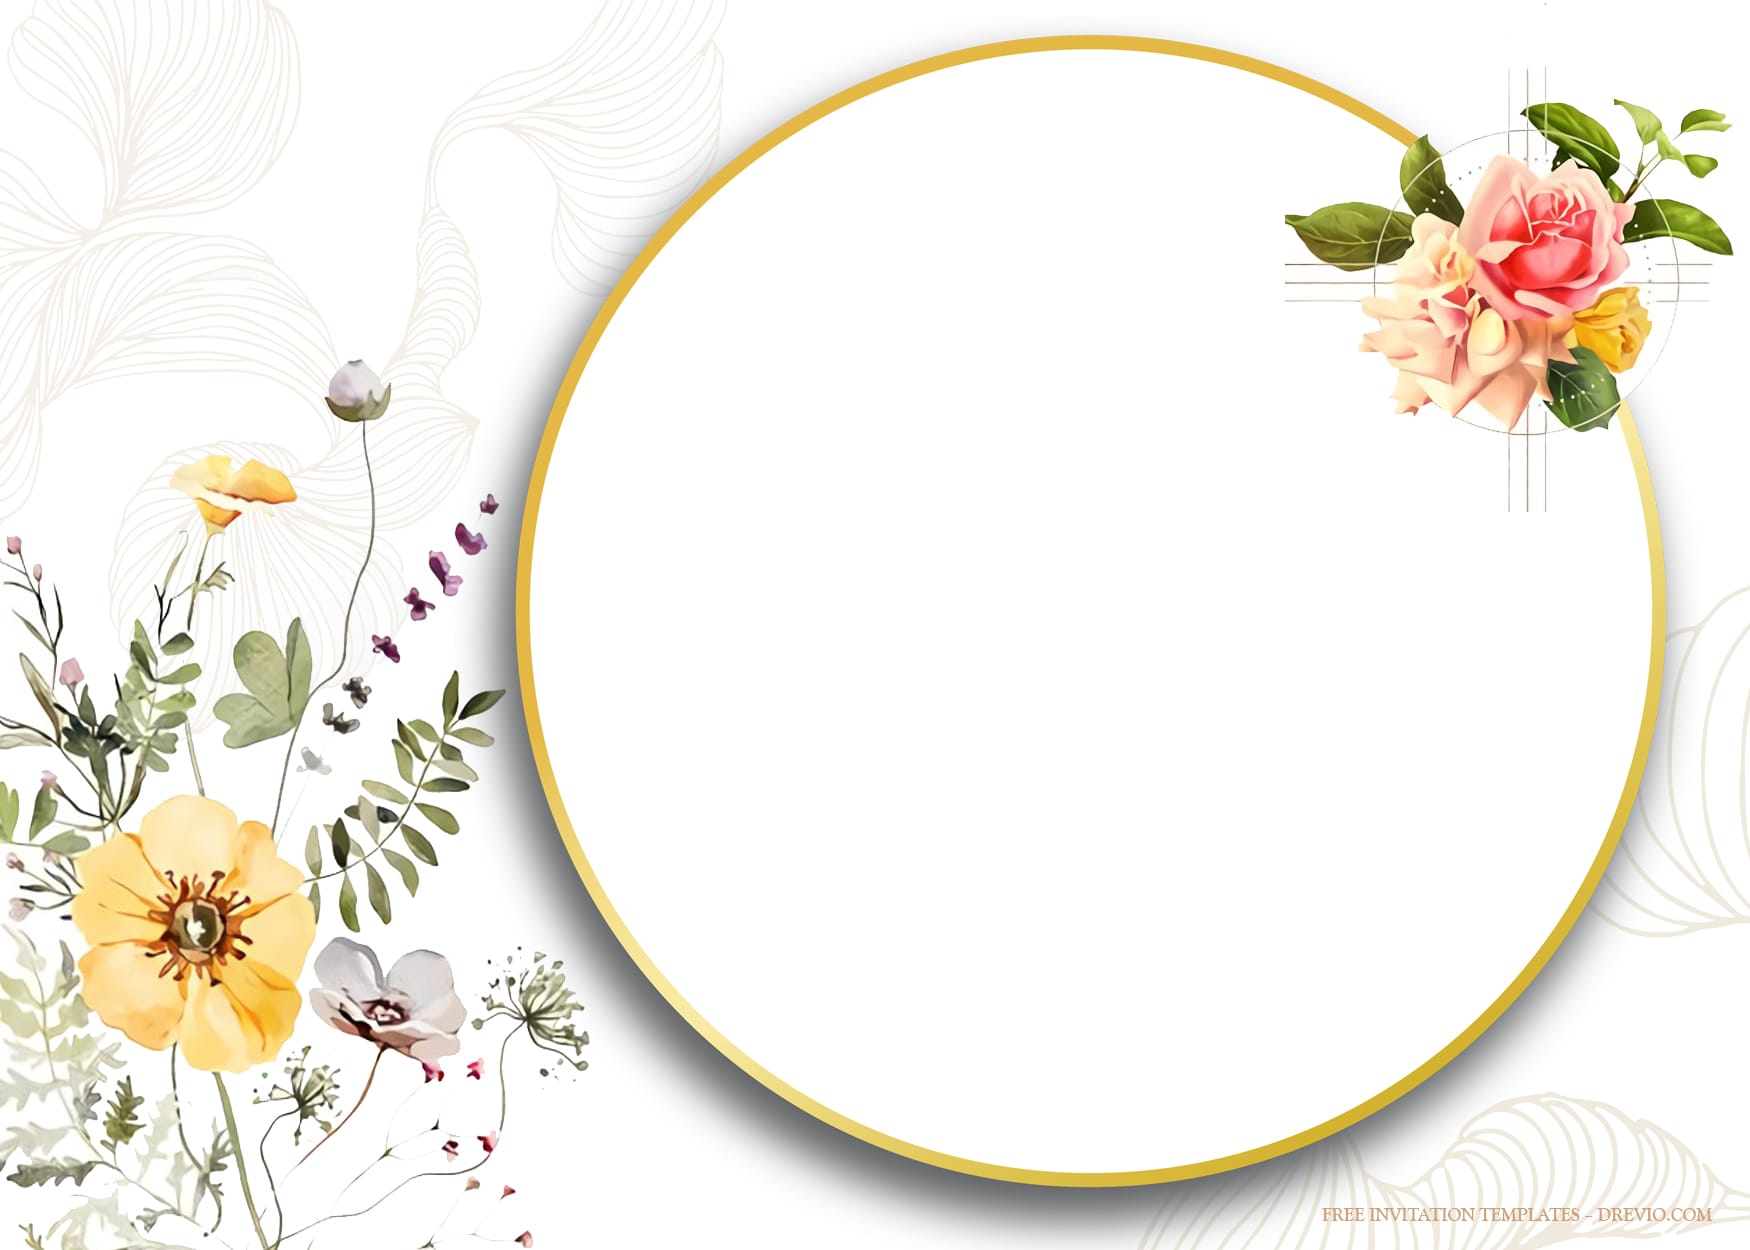 7+ Midsummer Wildflowers Garden Wedding Invitation Templates Type Three